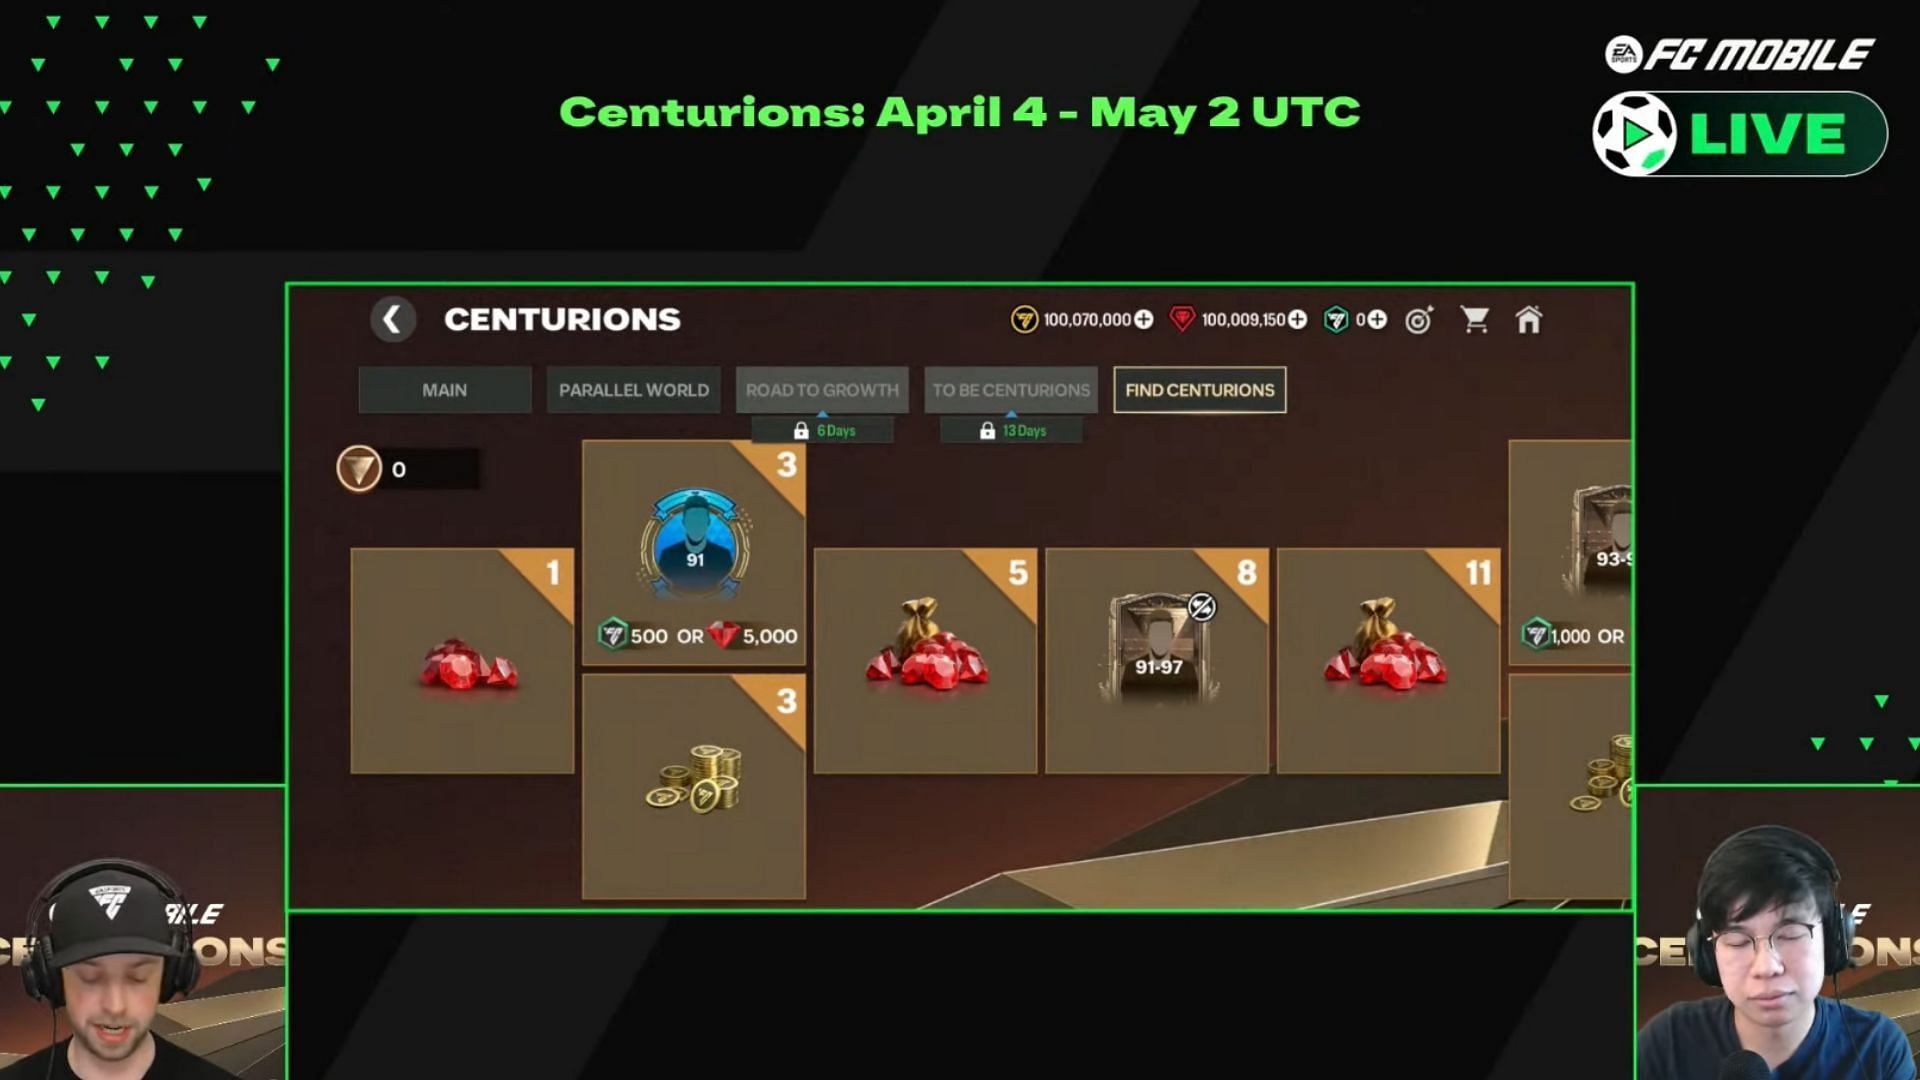 Milestone rewards of Find Centurions chapter in FC Mobile Centurions promo (Image via YouTube/EA Sports FC Mobile)